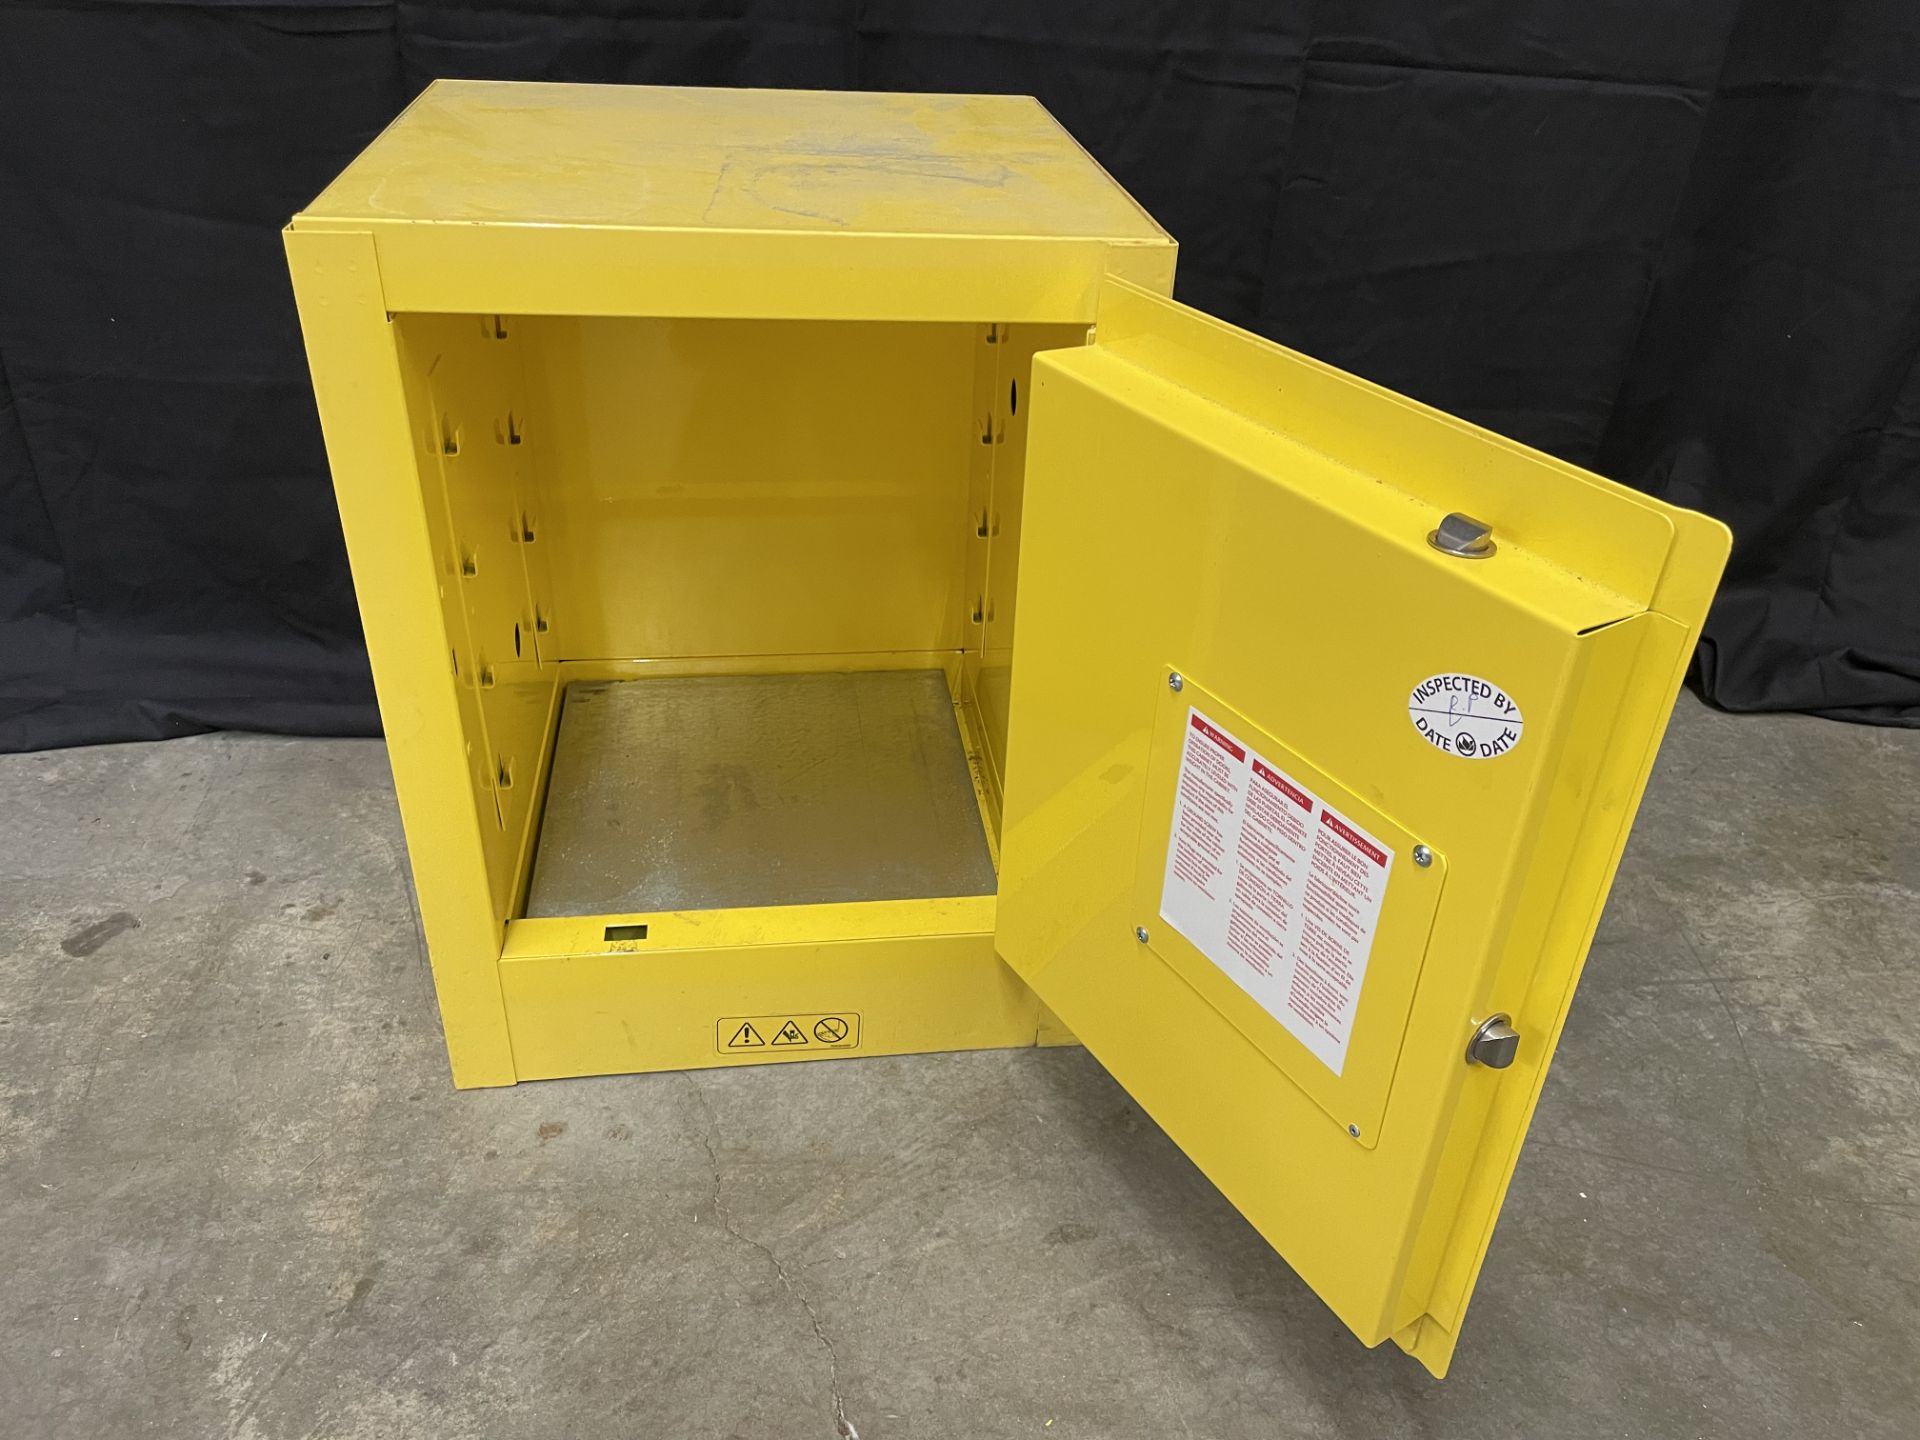 Uline Model H-2569M Countertop Flammable Liquid Storage Cabinet, 4 Gallon/15 Liter Capacity - Image 3 of 3